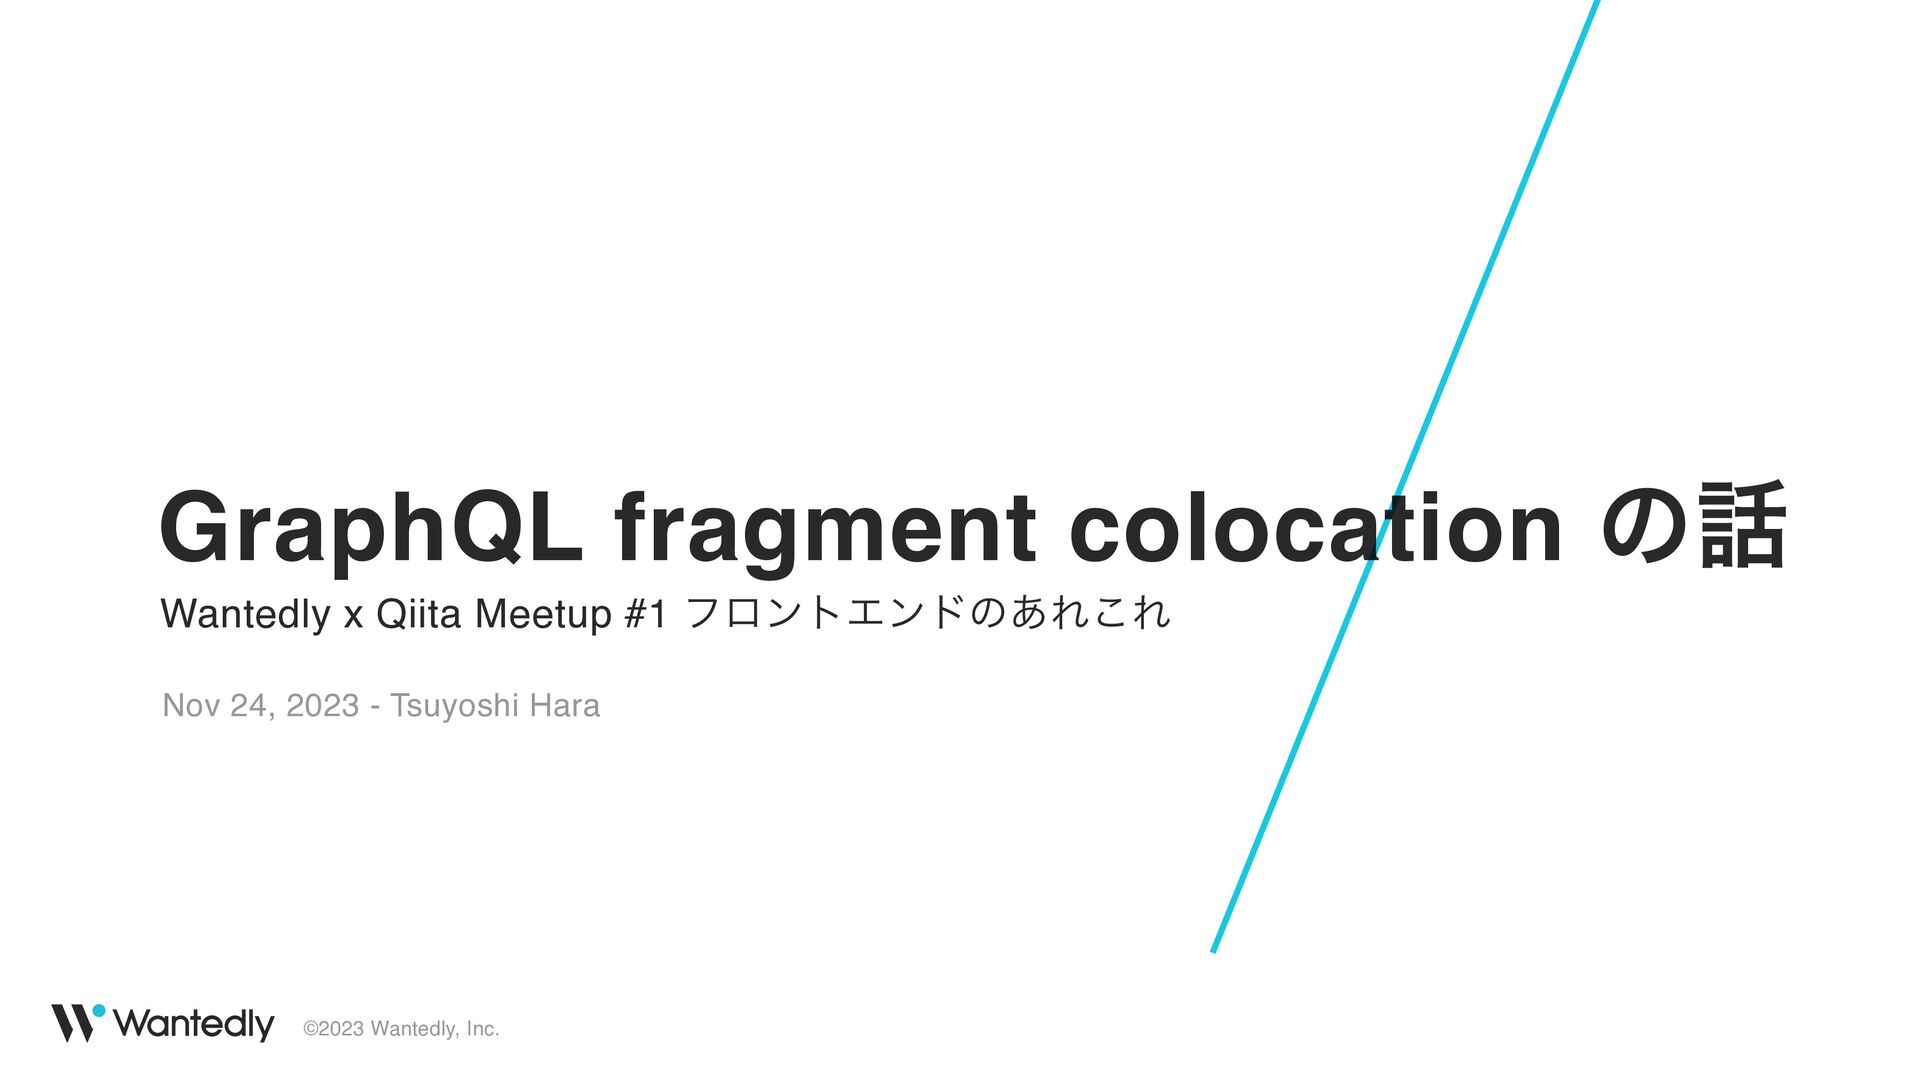 GraphQL Fragment Colocation の話